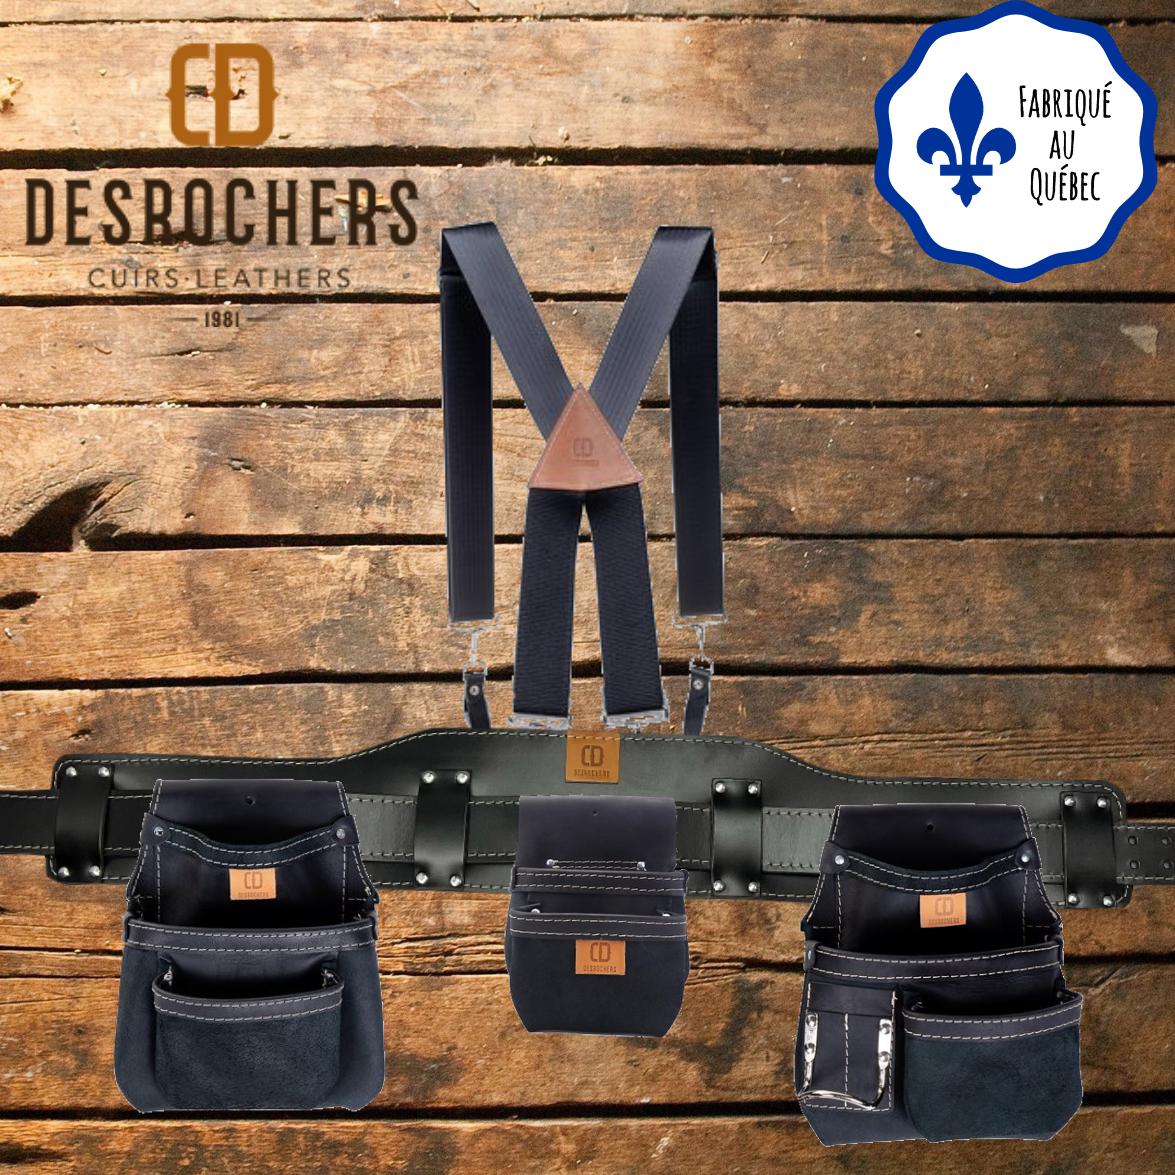 Desrochers Harness / Nail bag kit (8 pockets)